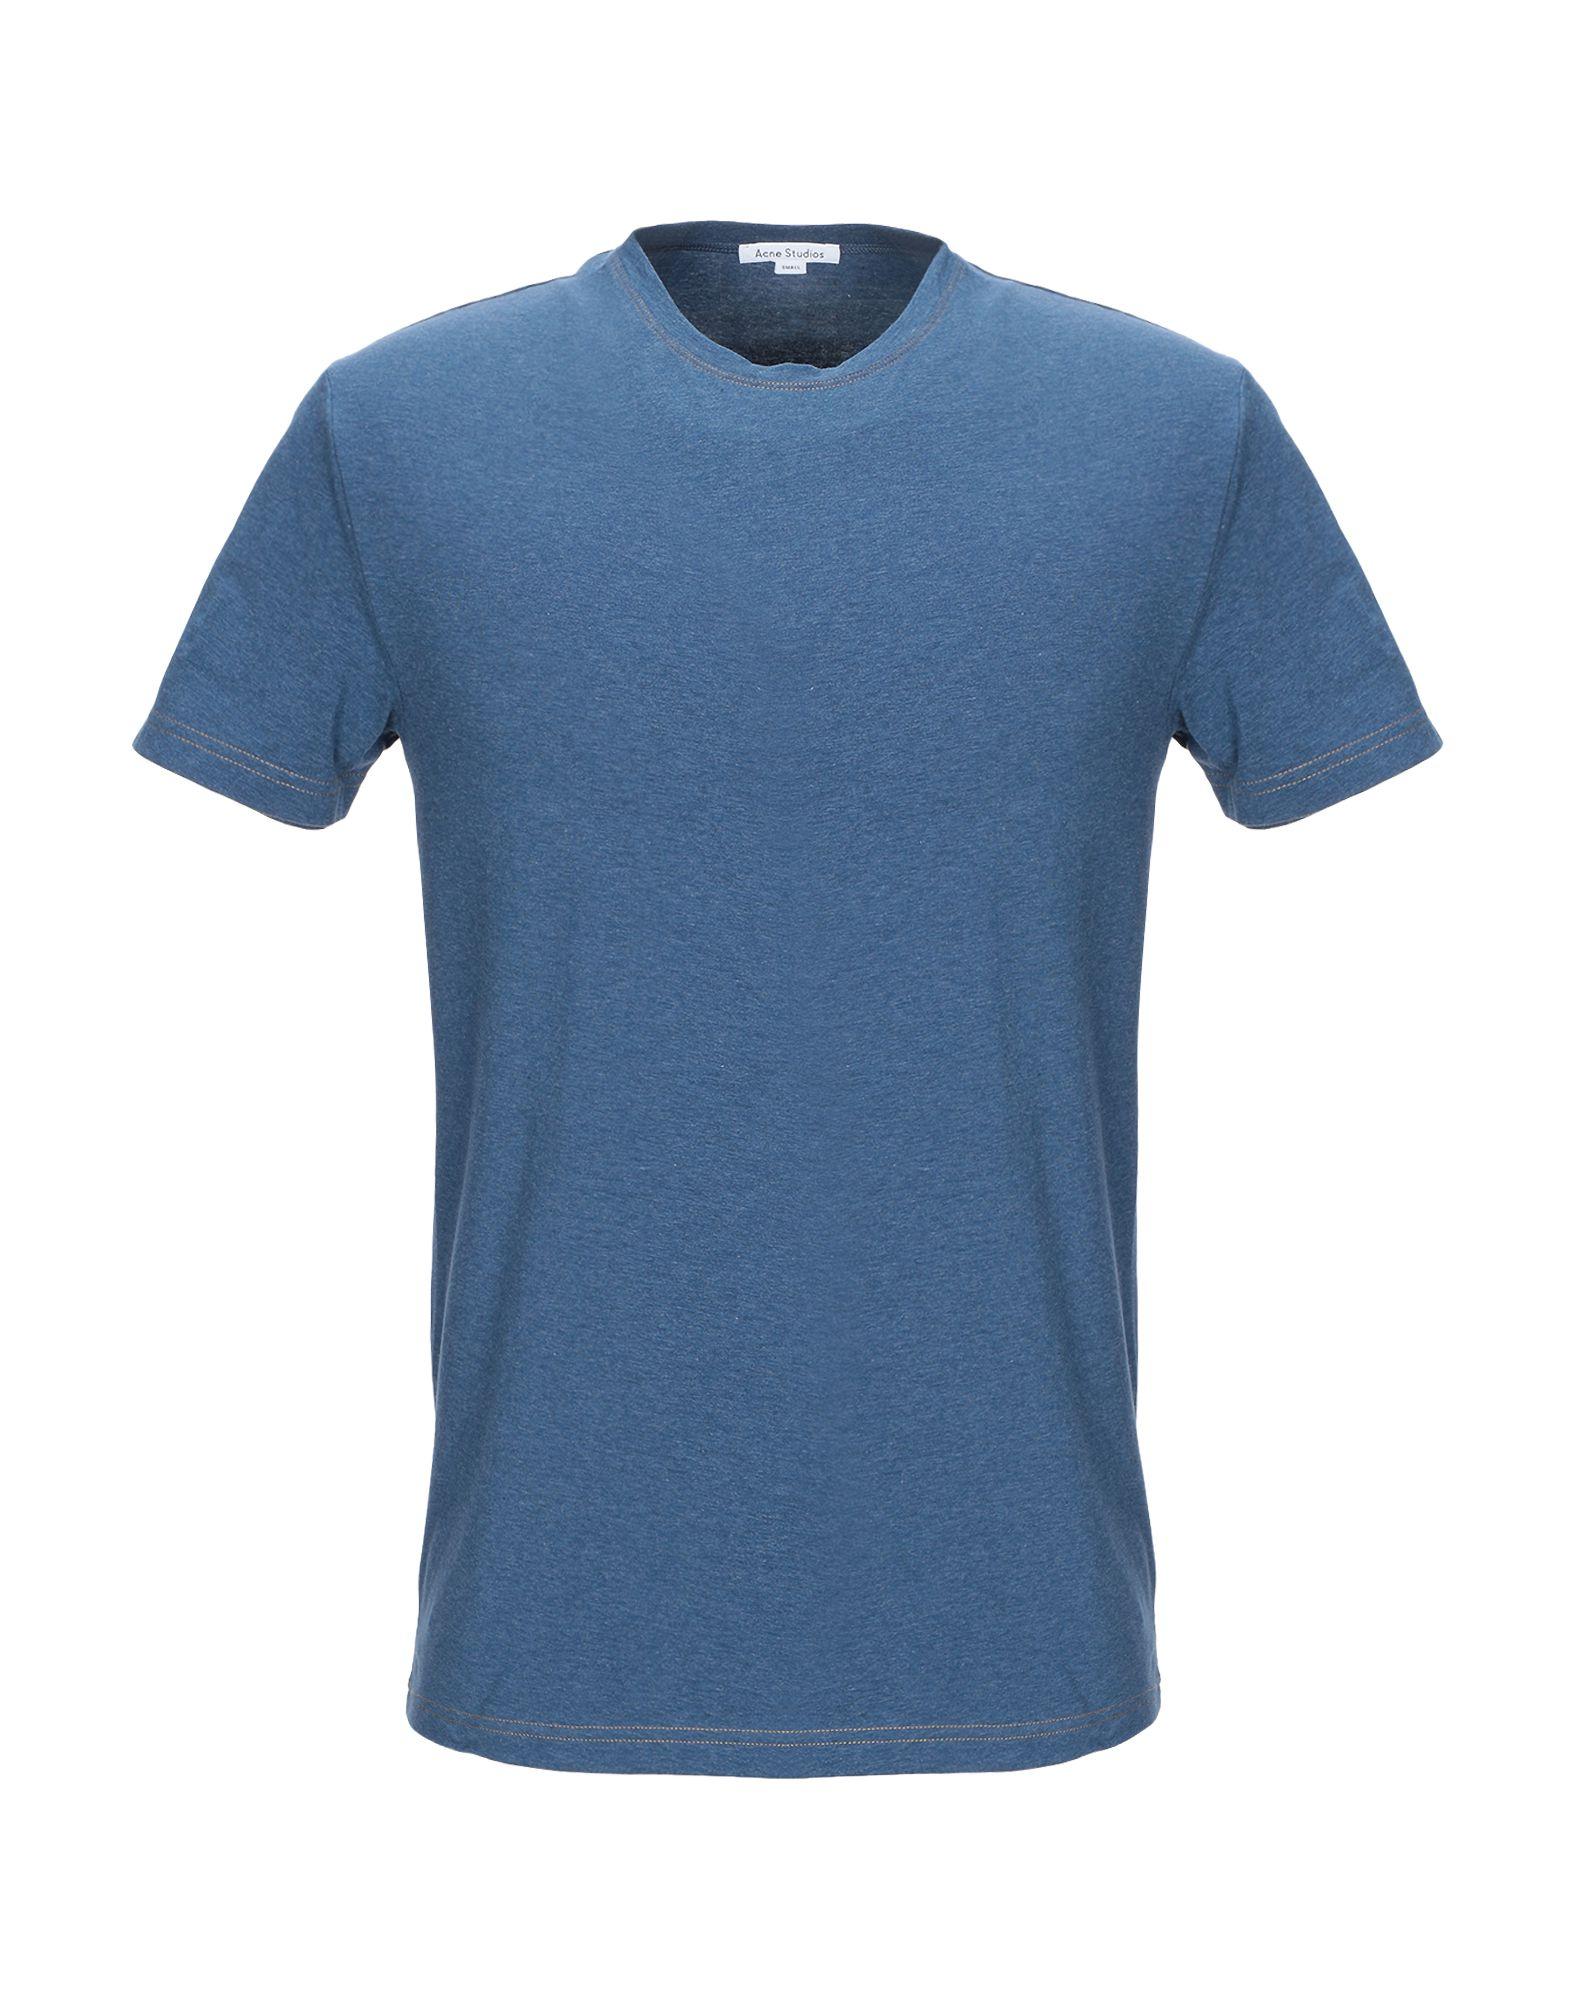 Acne Studios Undershirt in Blue for Men - Lyst